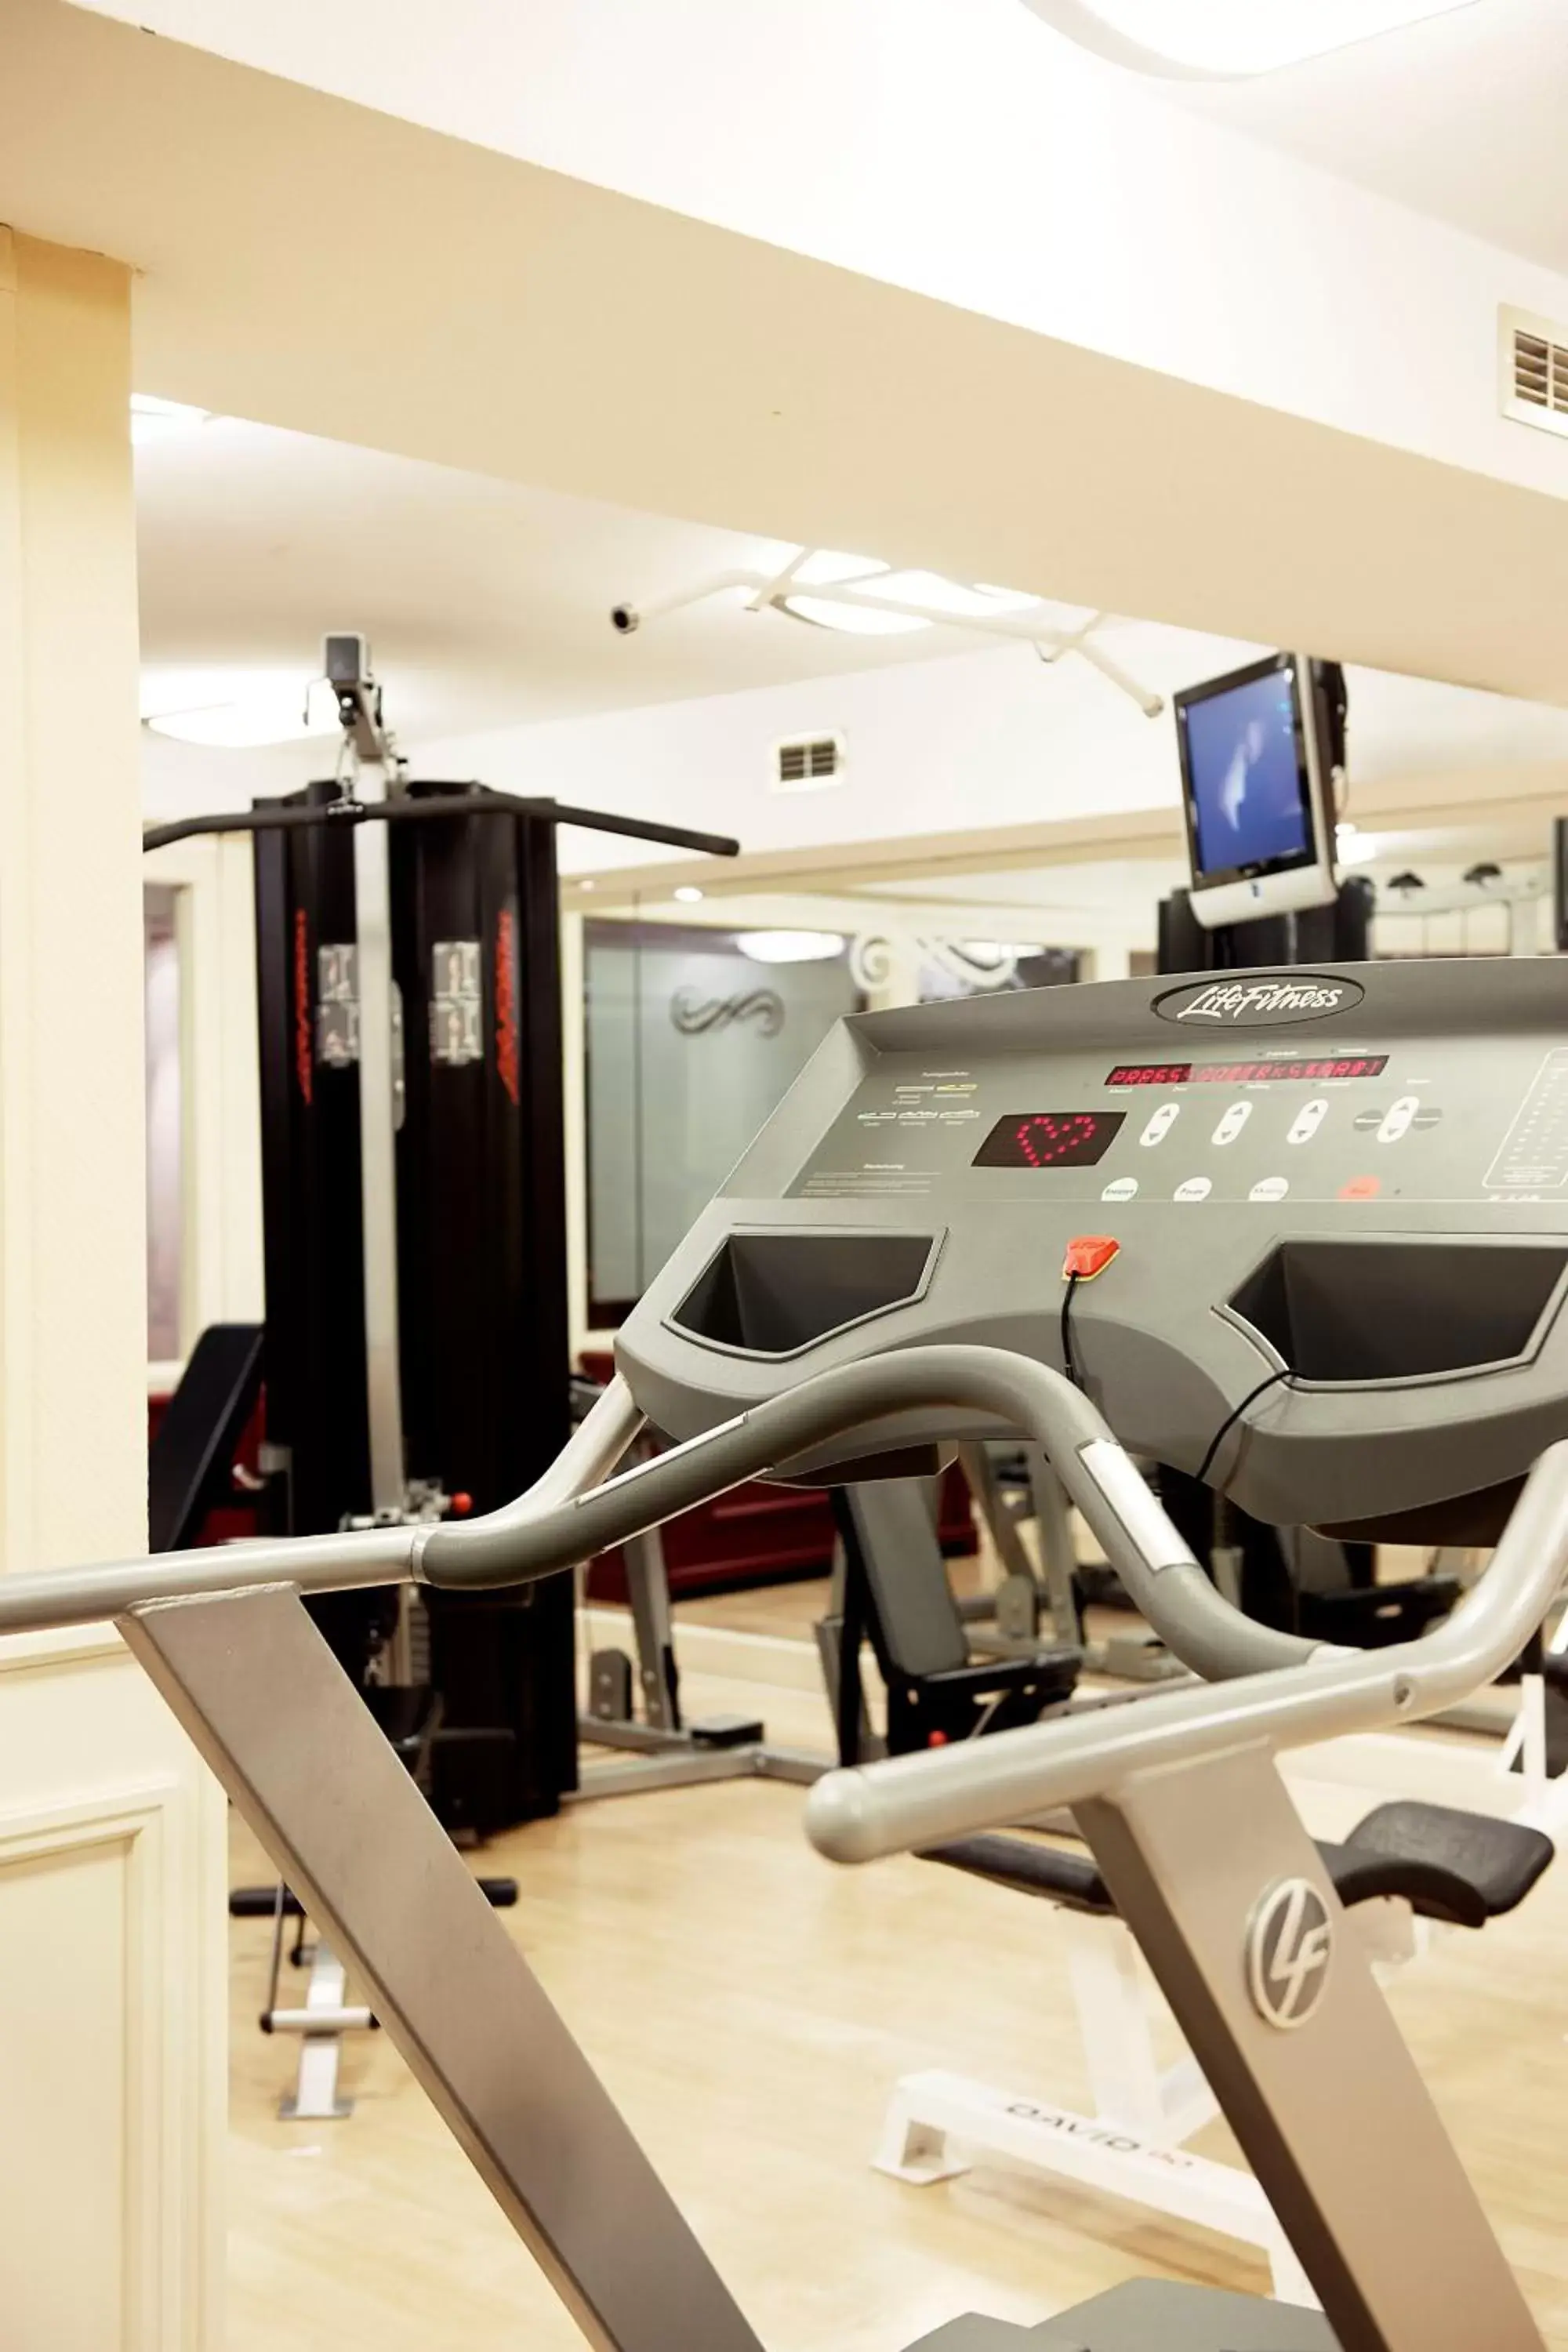 Fitness centre/facilities, Fitness Center/Facilities in Carlton President